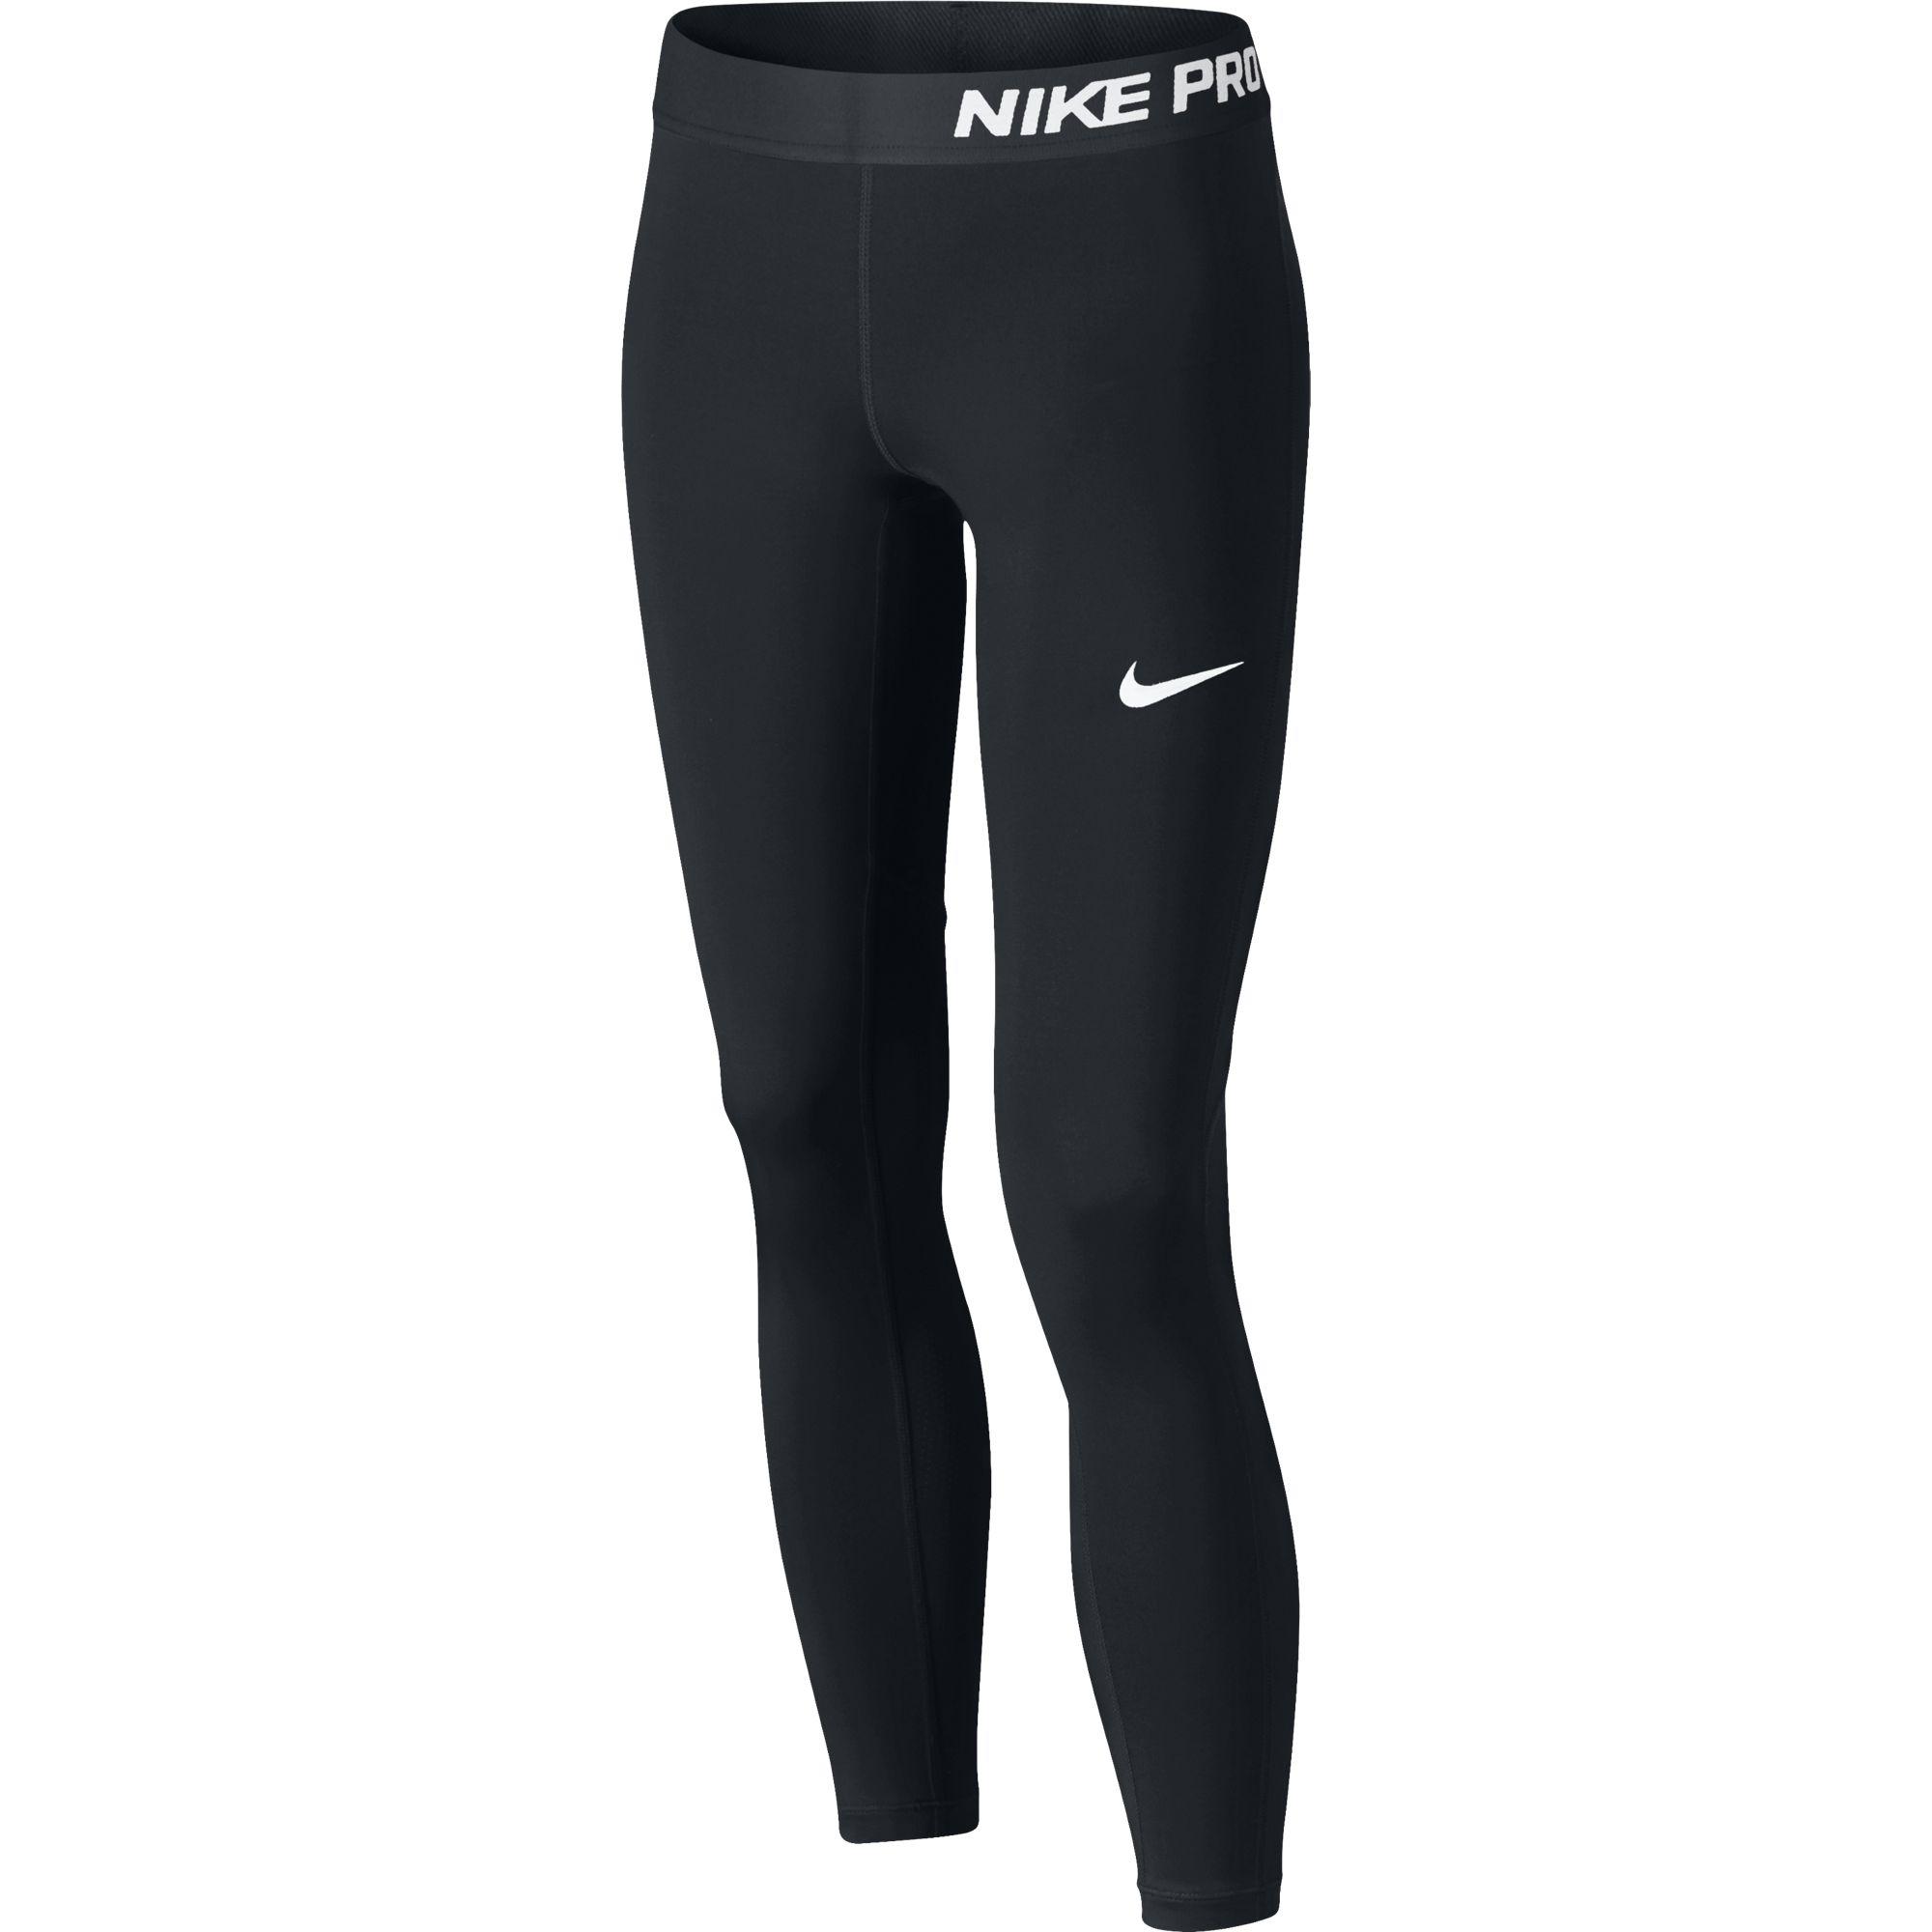 Nike Girls Pro Tights - Black/White - Tennisnuts.com